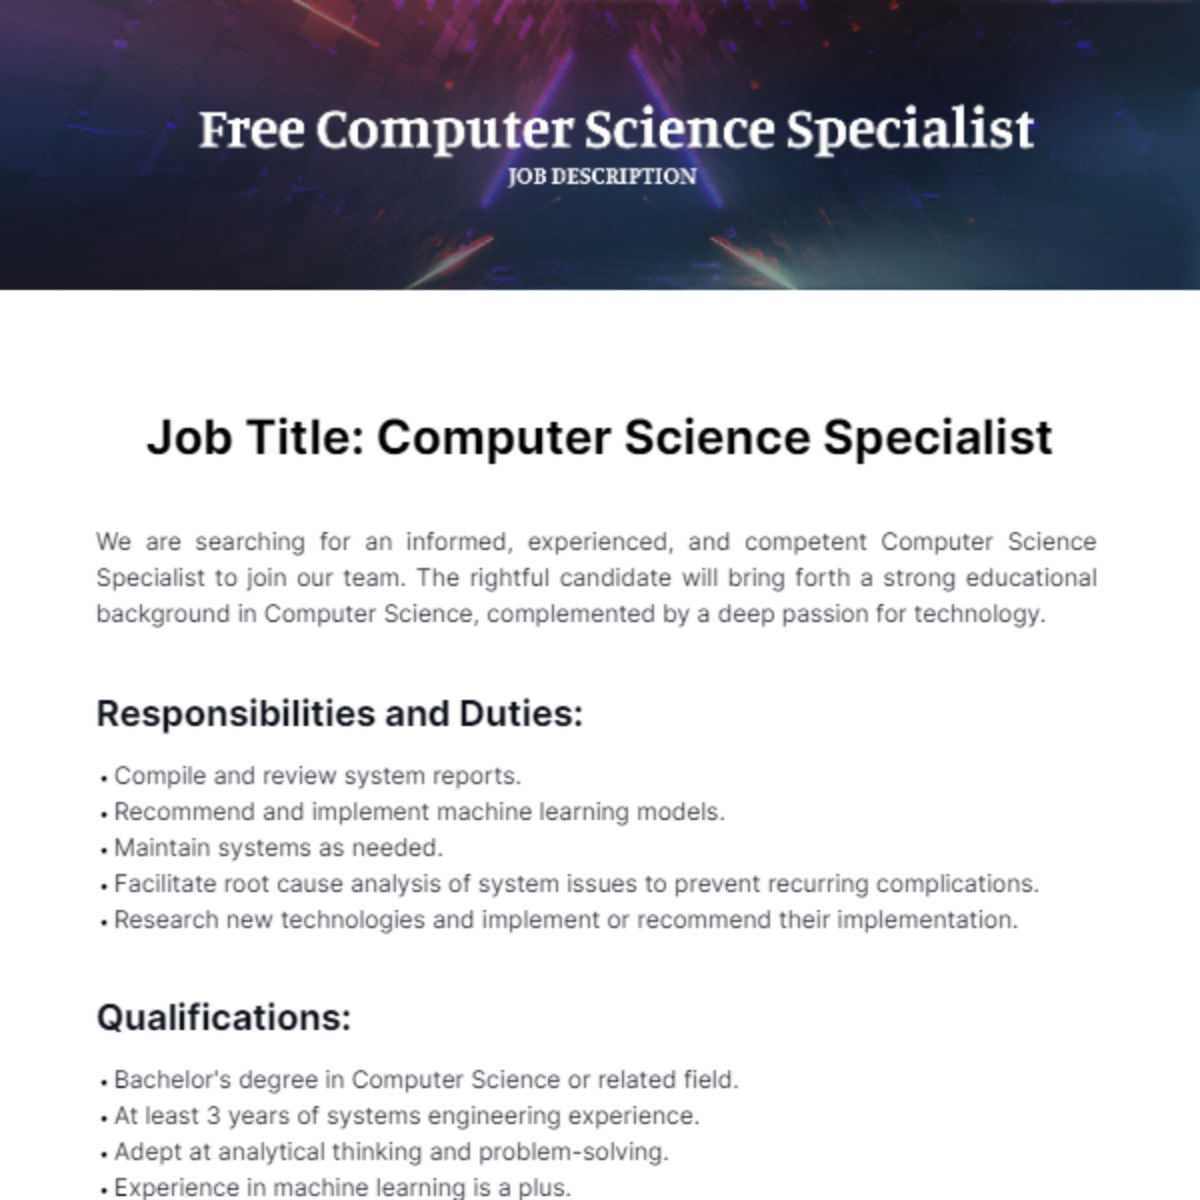 Computer Science Specialist Job Description Template